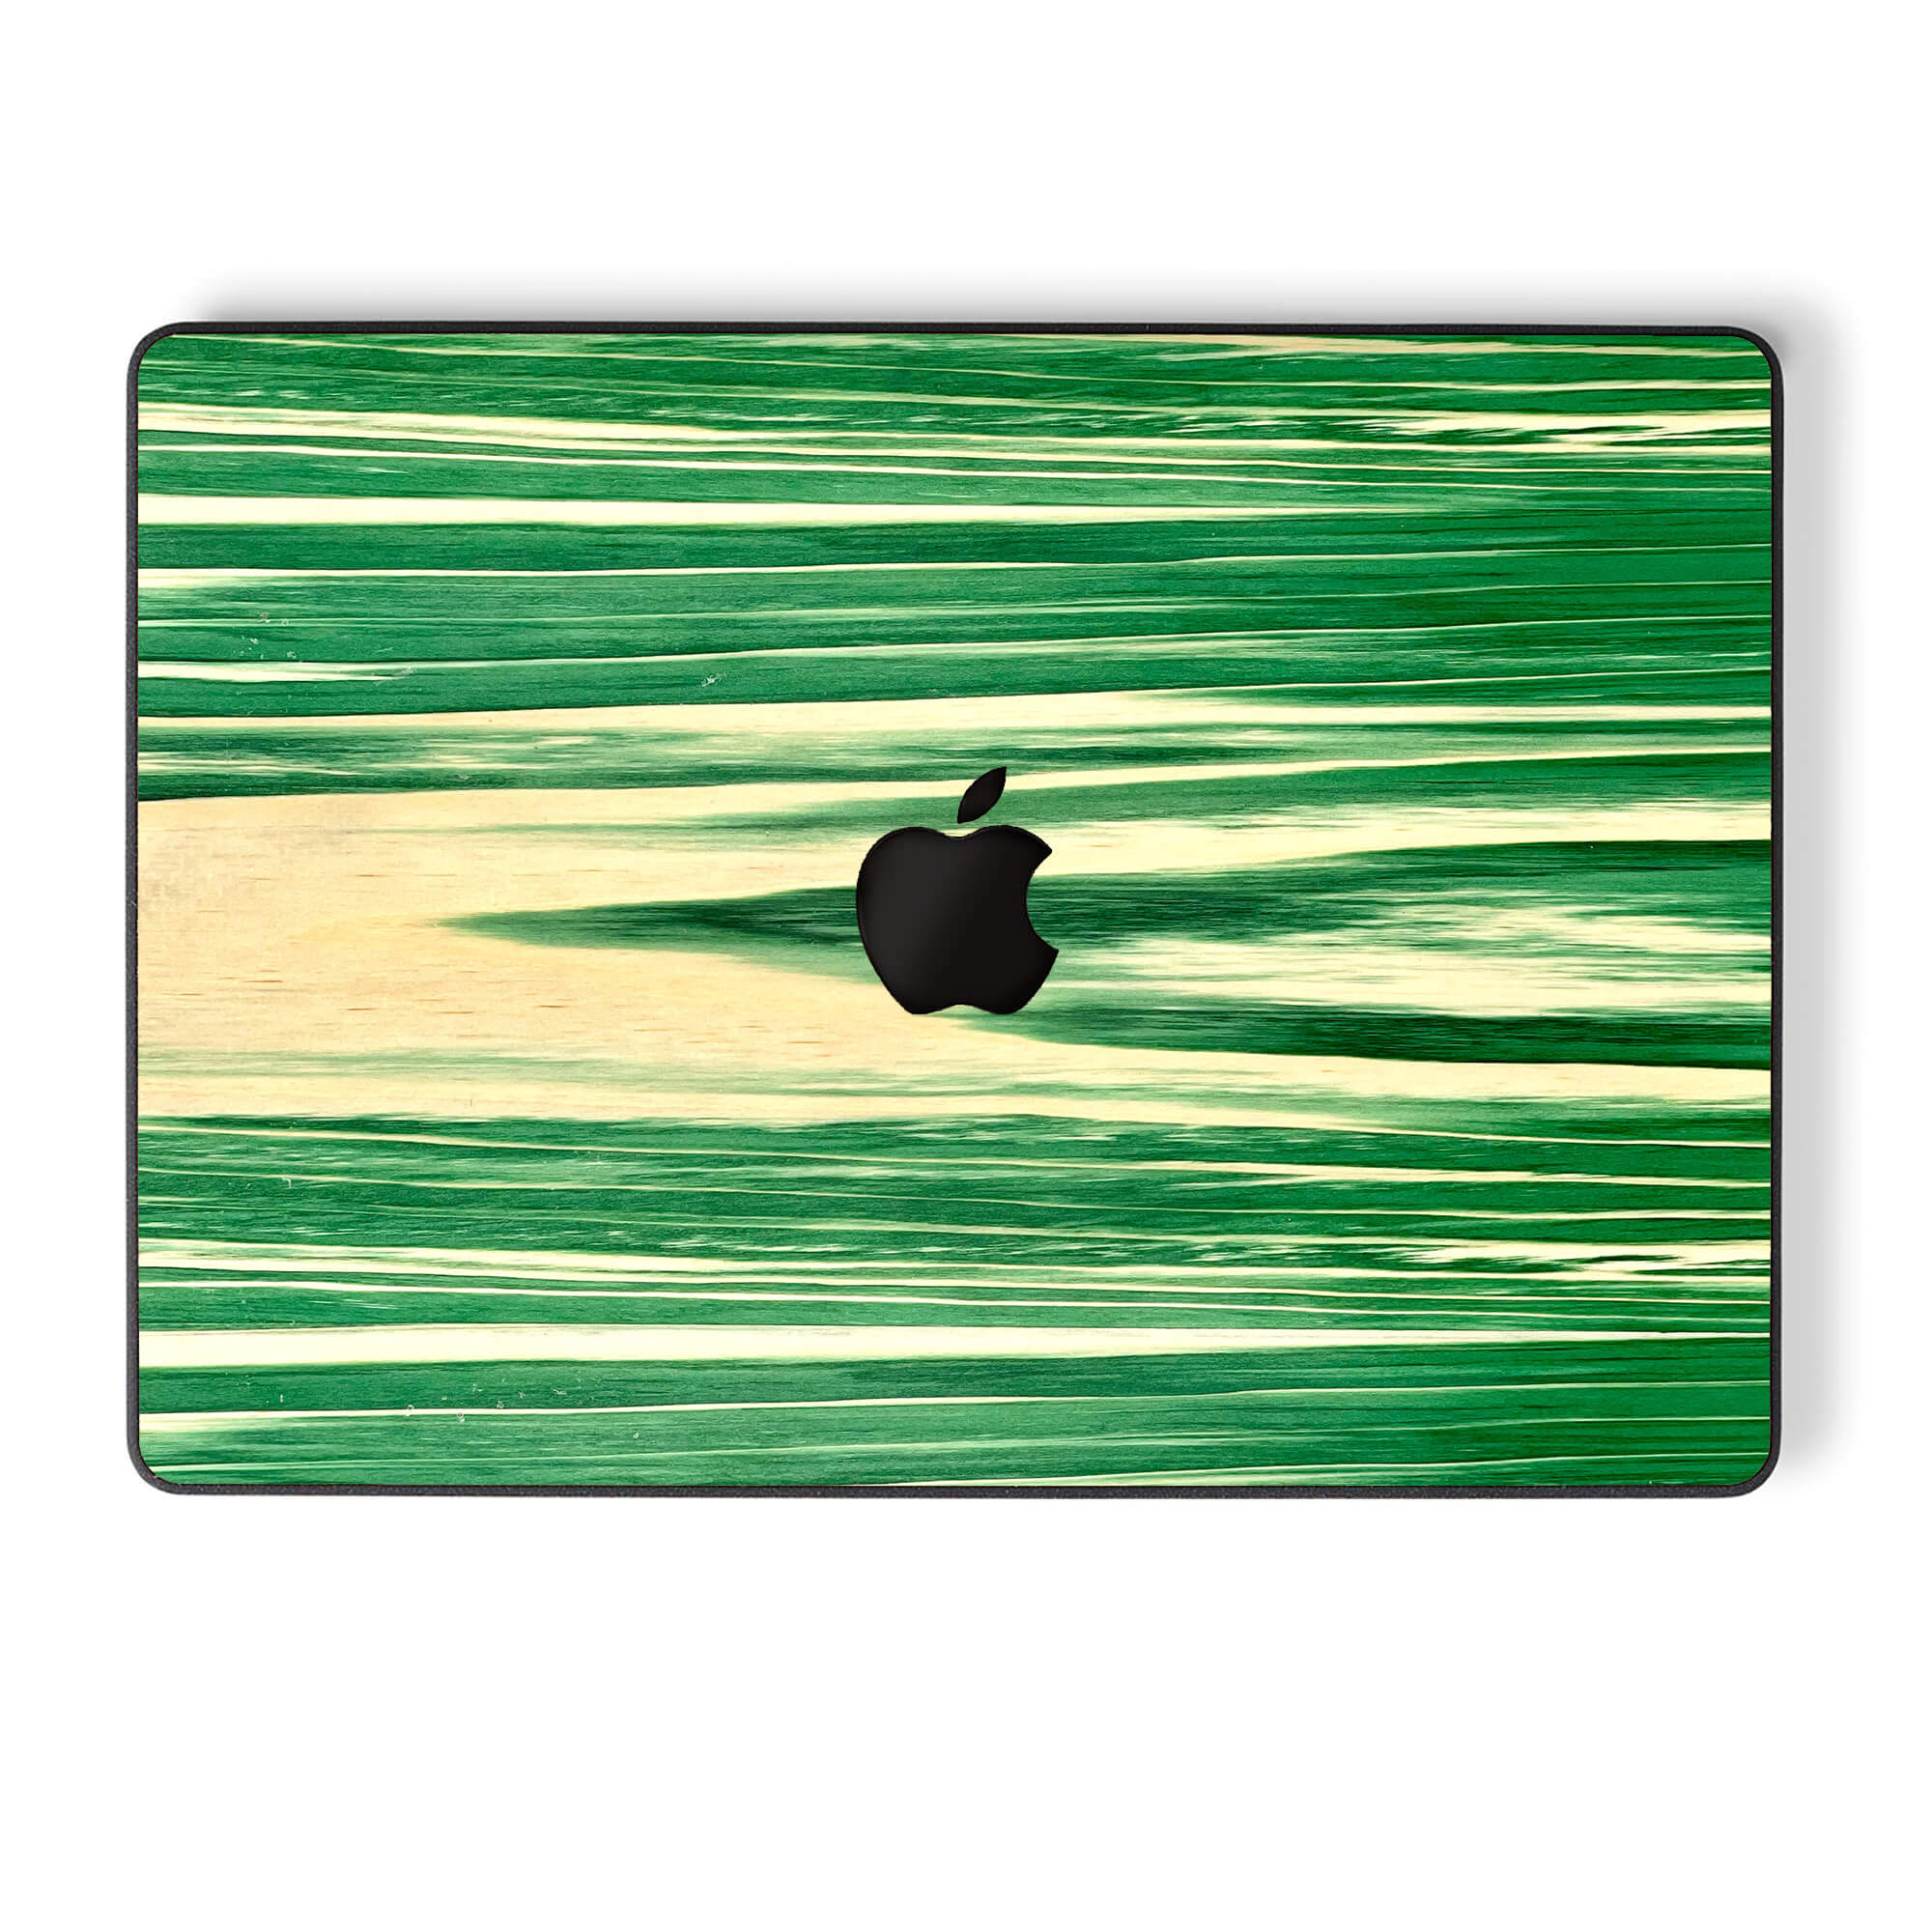 MacBook Irodori Dyed Wood Case